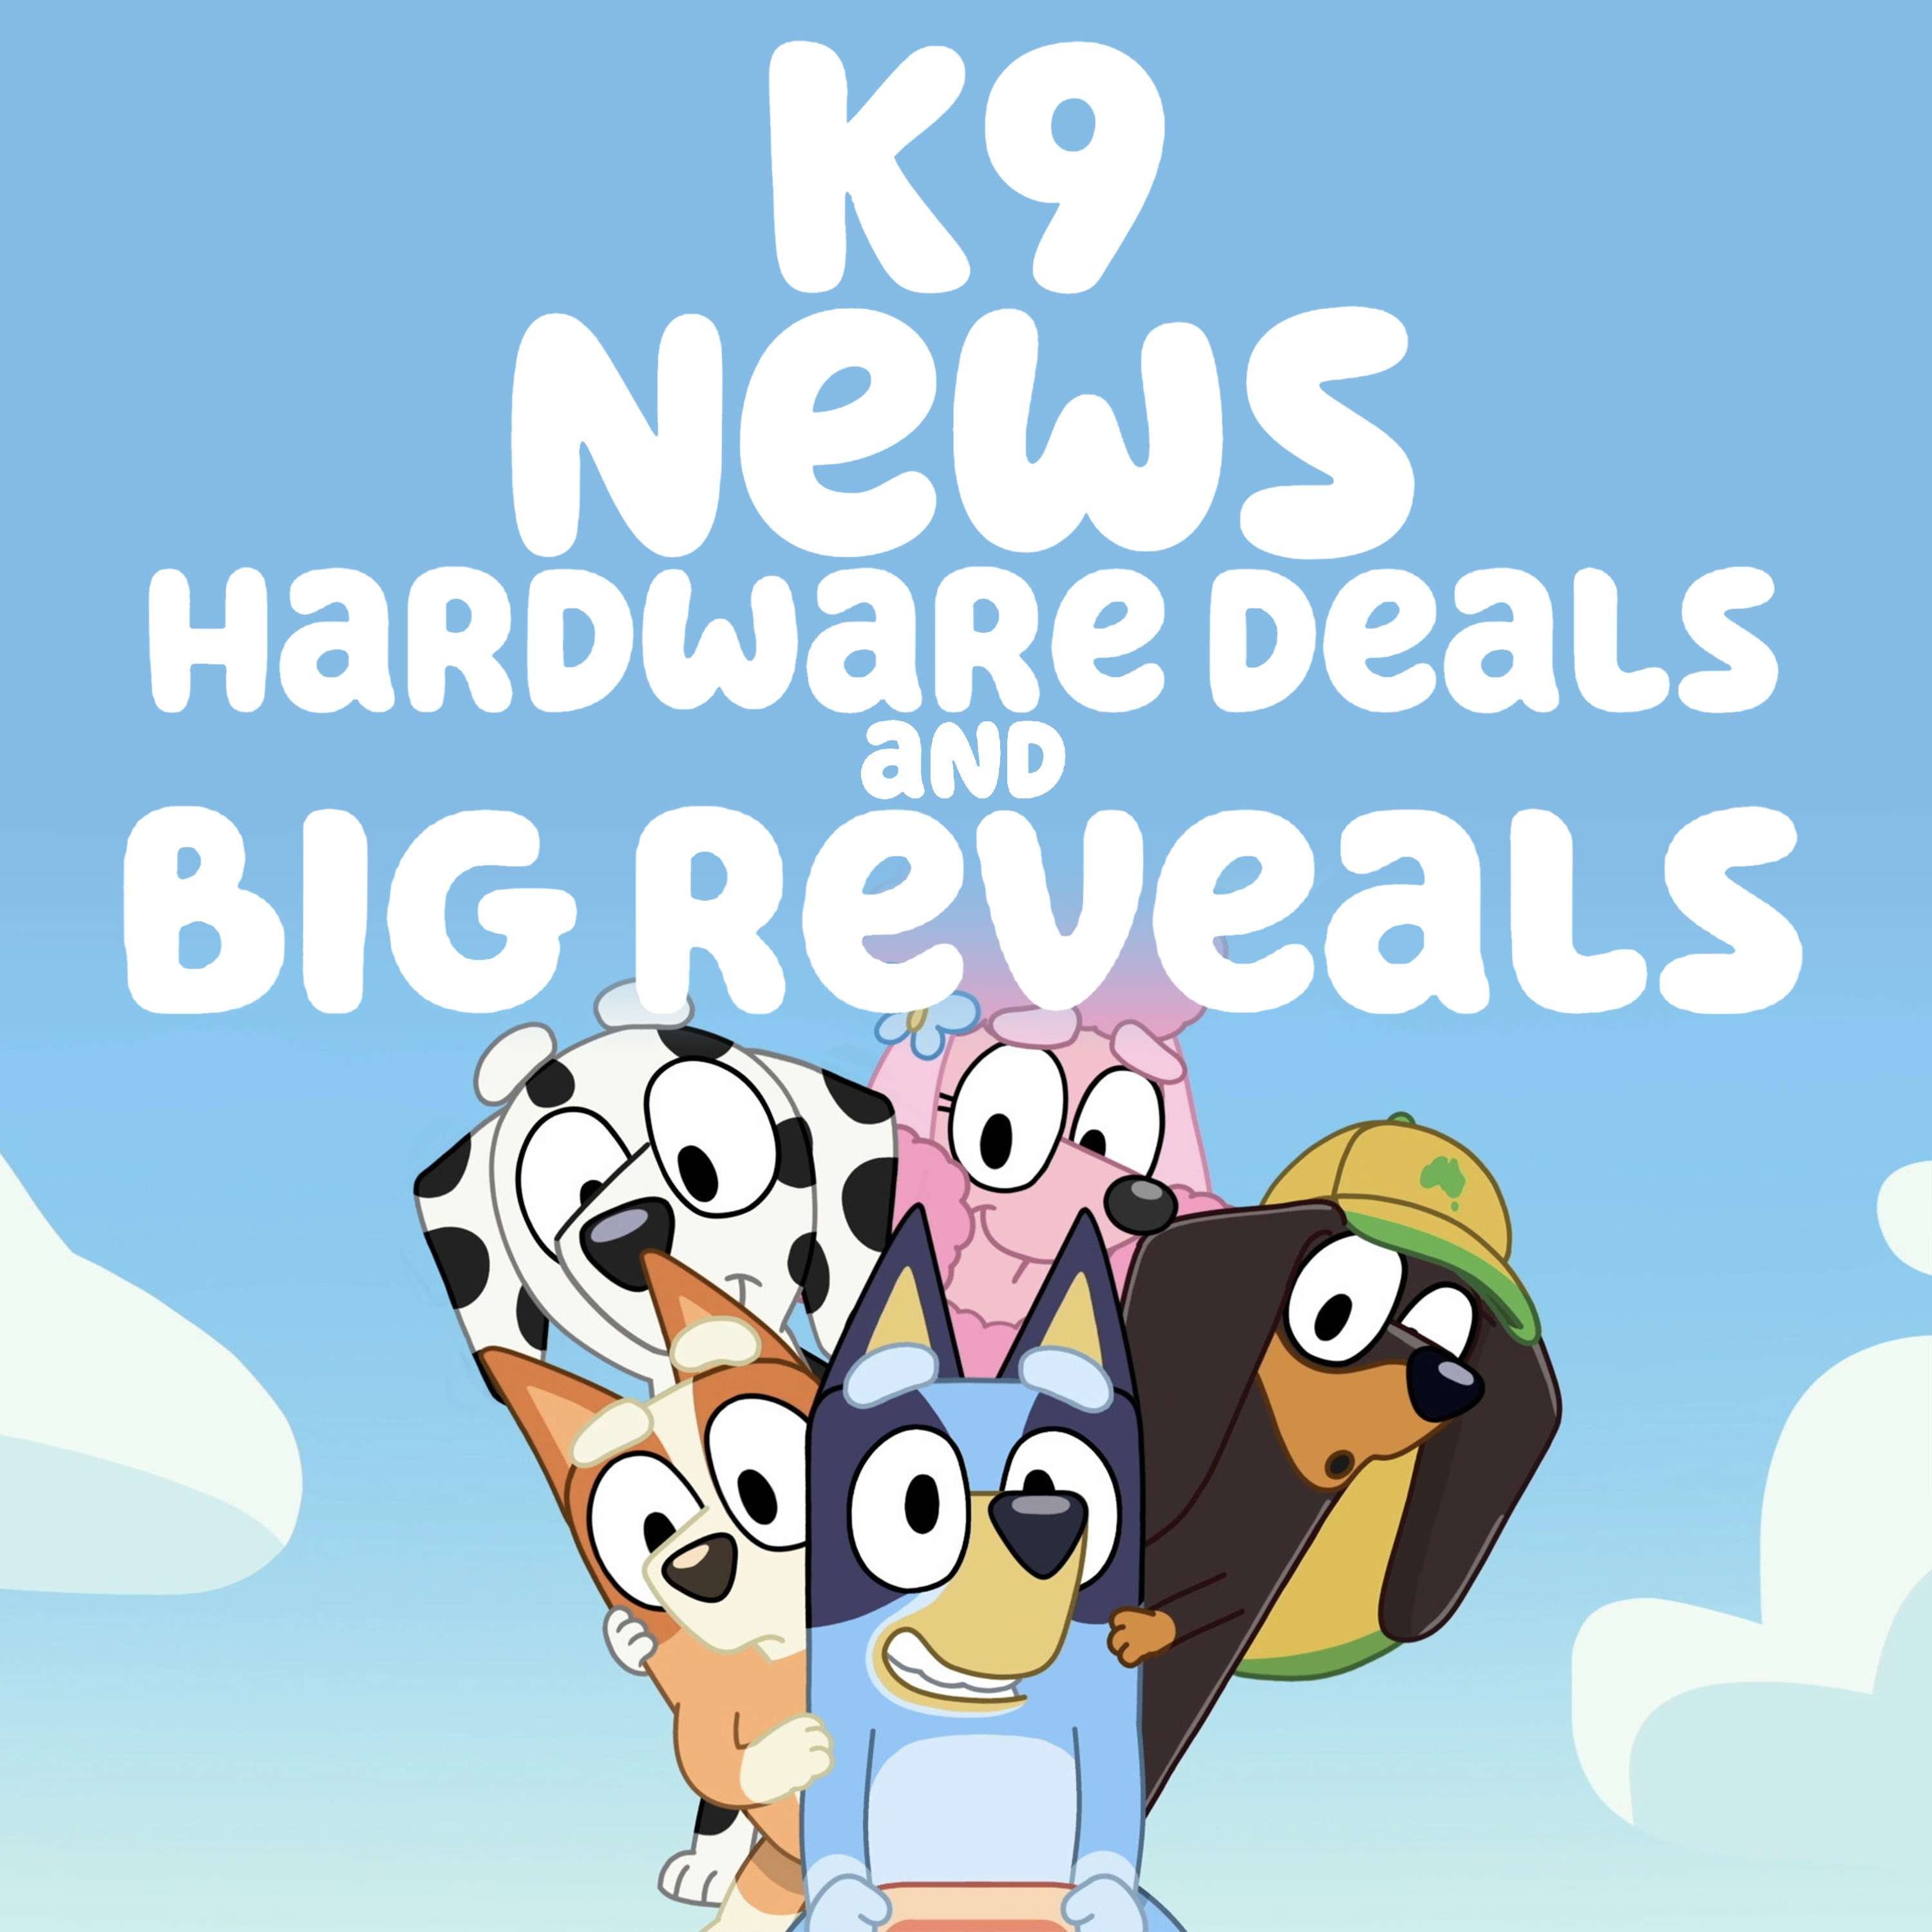 K9 NEWS: Hardware Deals and Big Revals